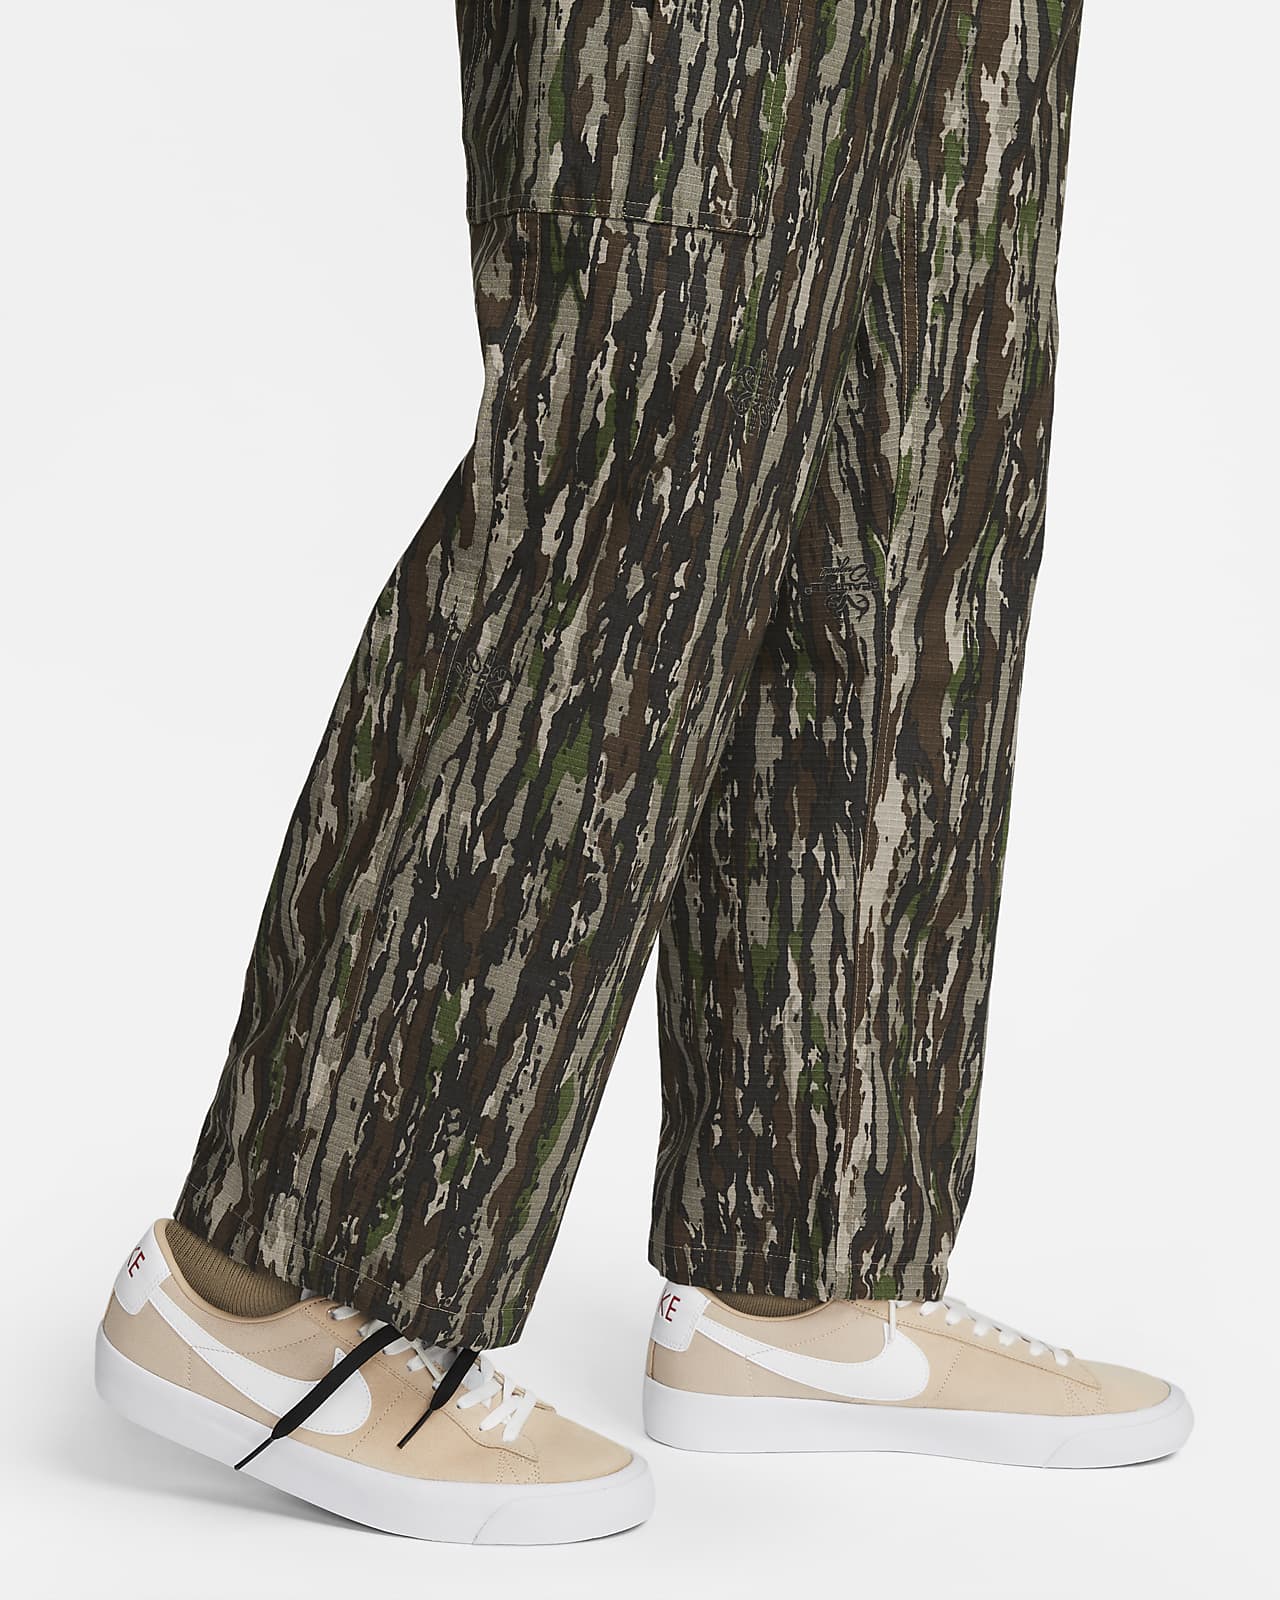 Nike SB Flex Camo Cargo Pants Skatebording Military Camouflage Sz 28 Rare |  eBay